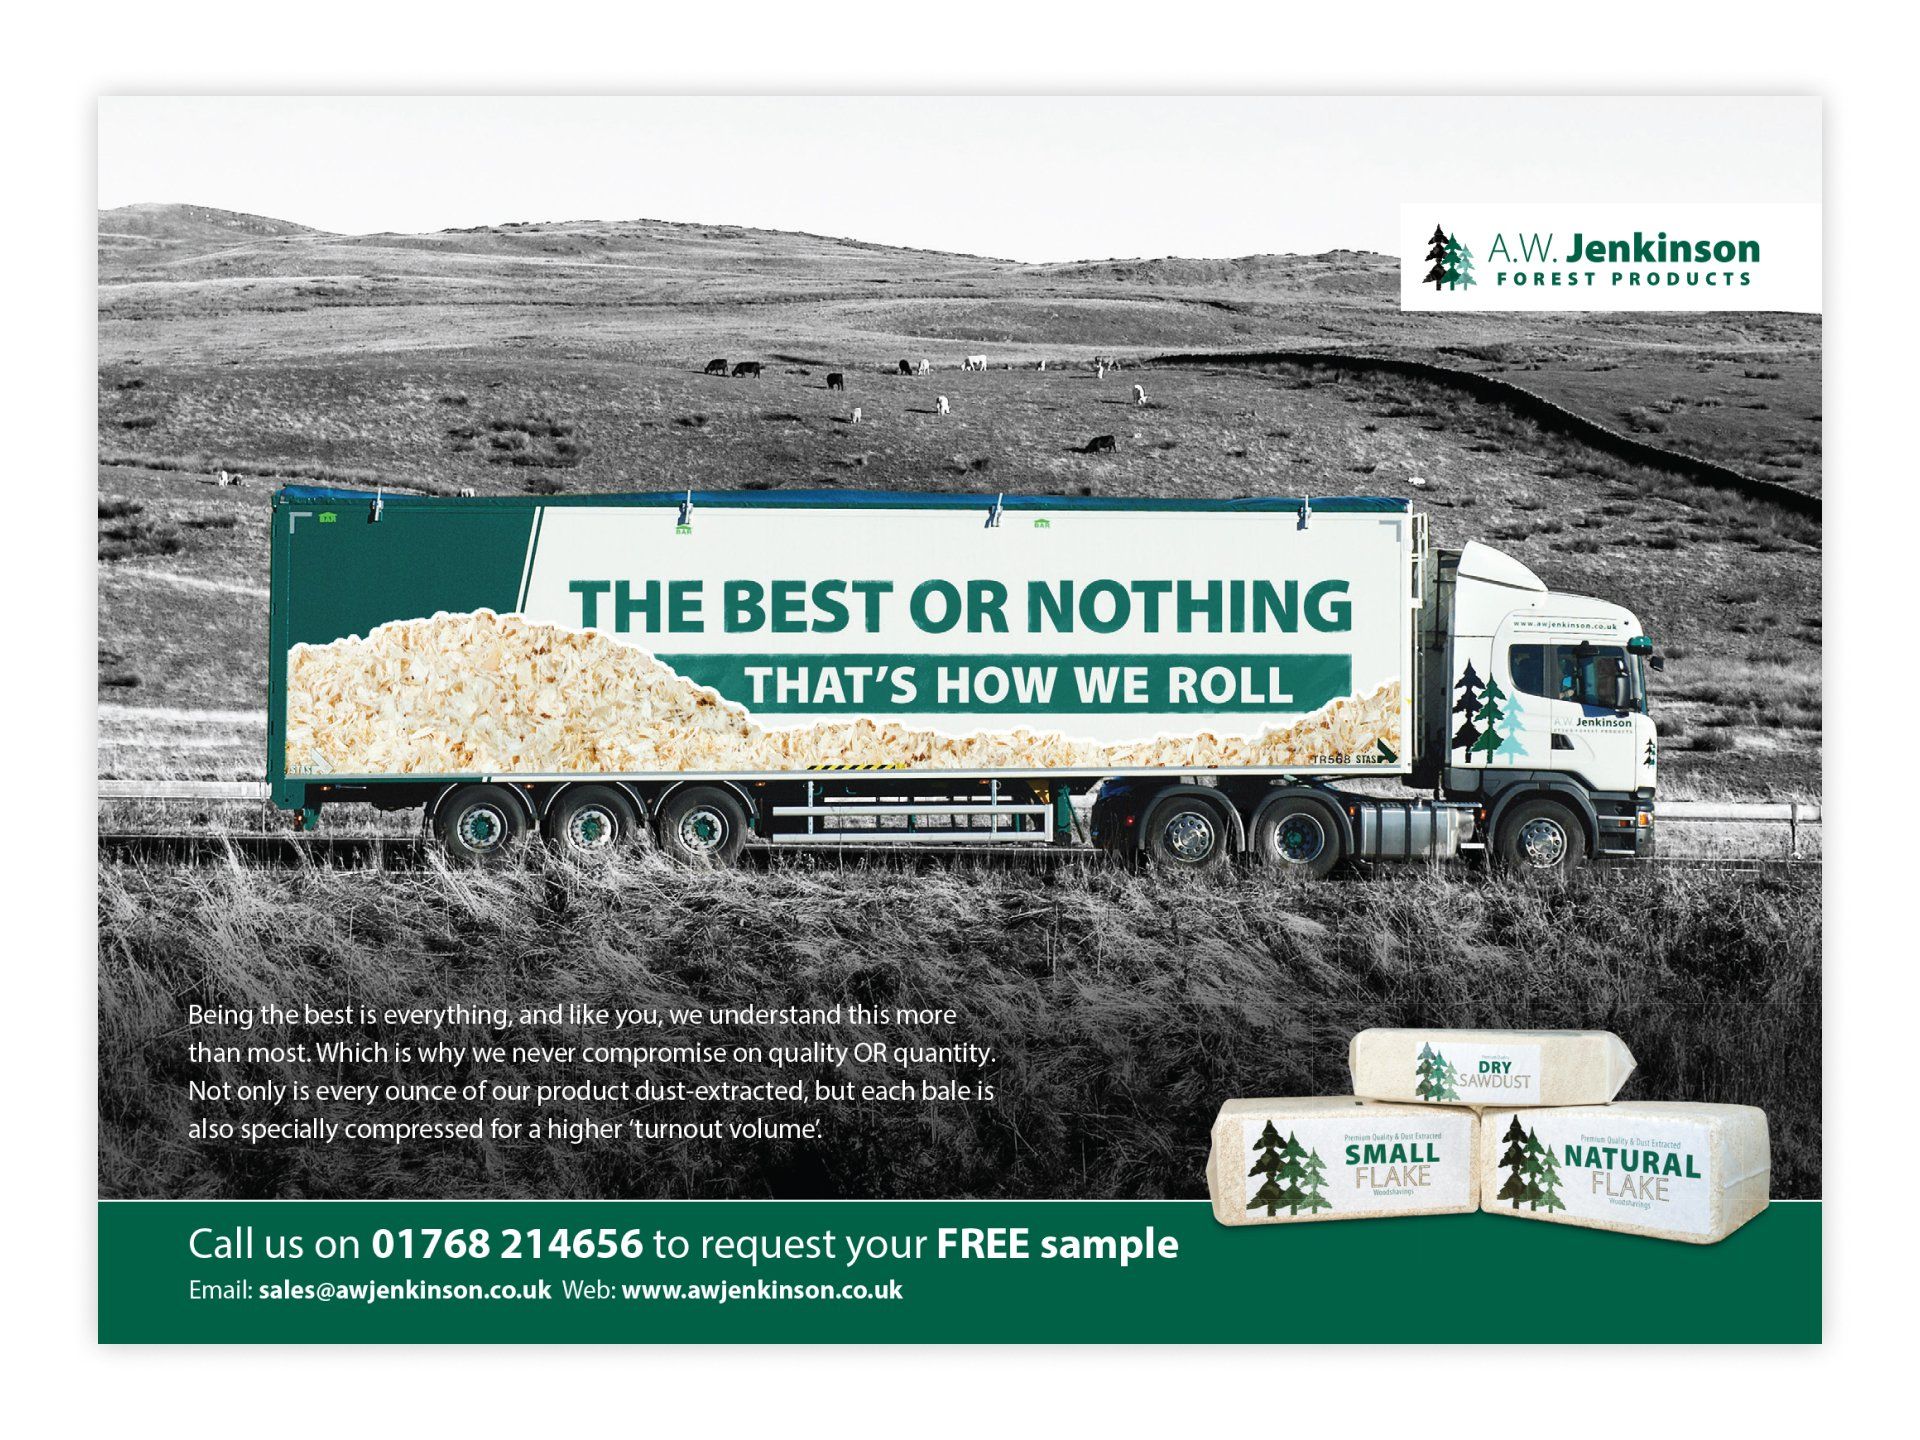 Print advert for A.W. Jenkinson premium livestock bedding. Headline: